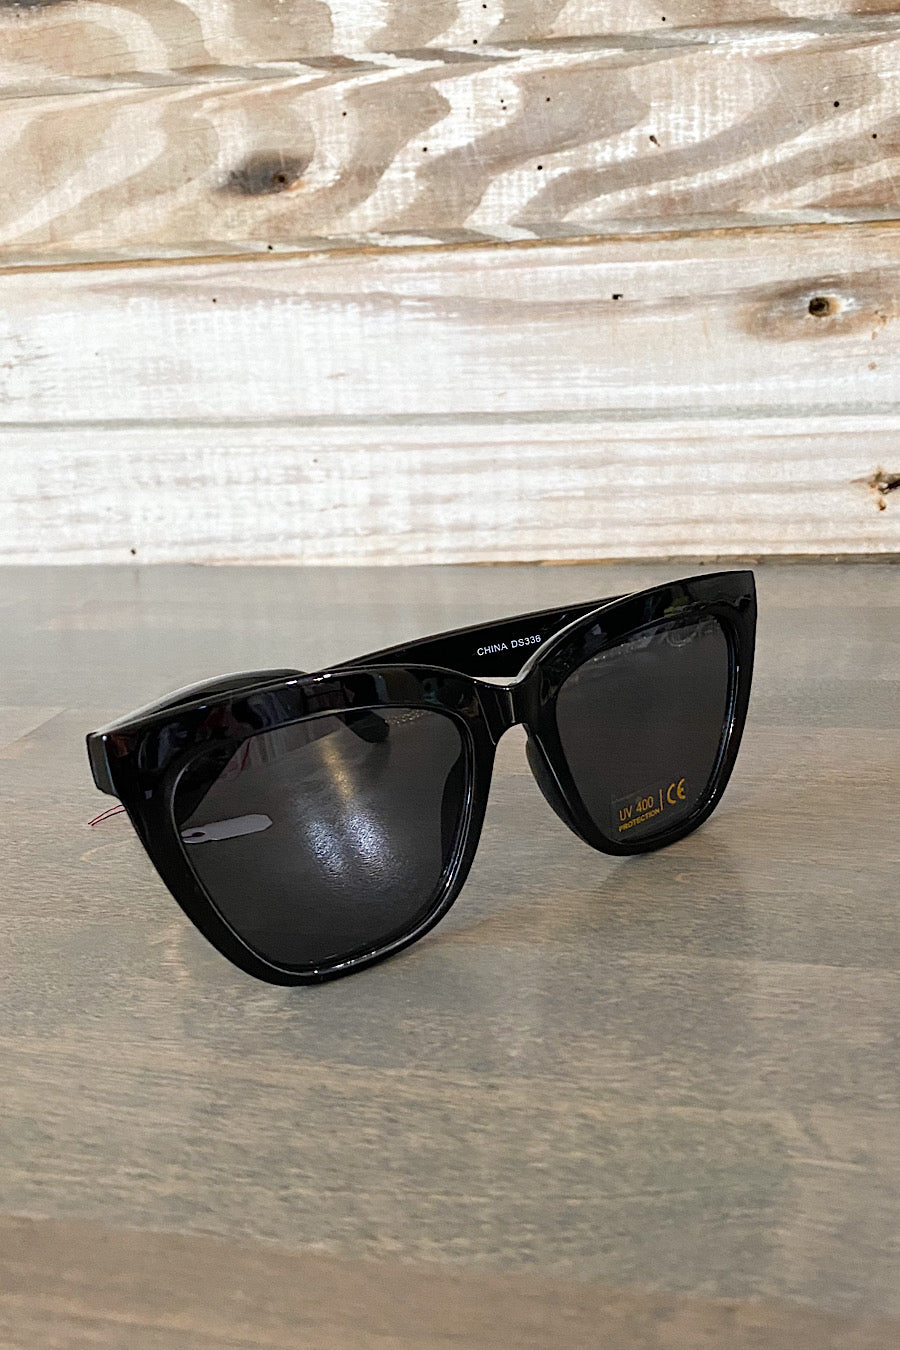 Classic Wayfarer Sunglasses in 4 colors